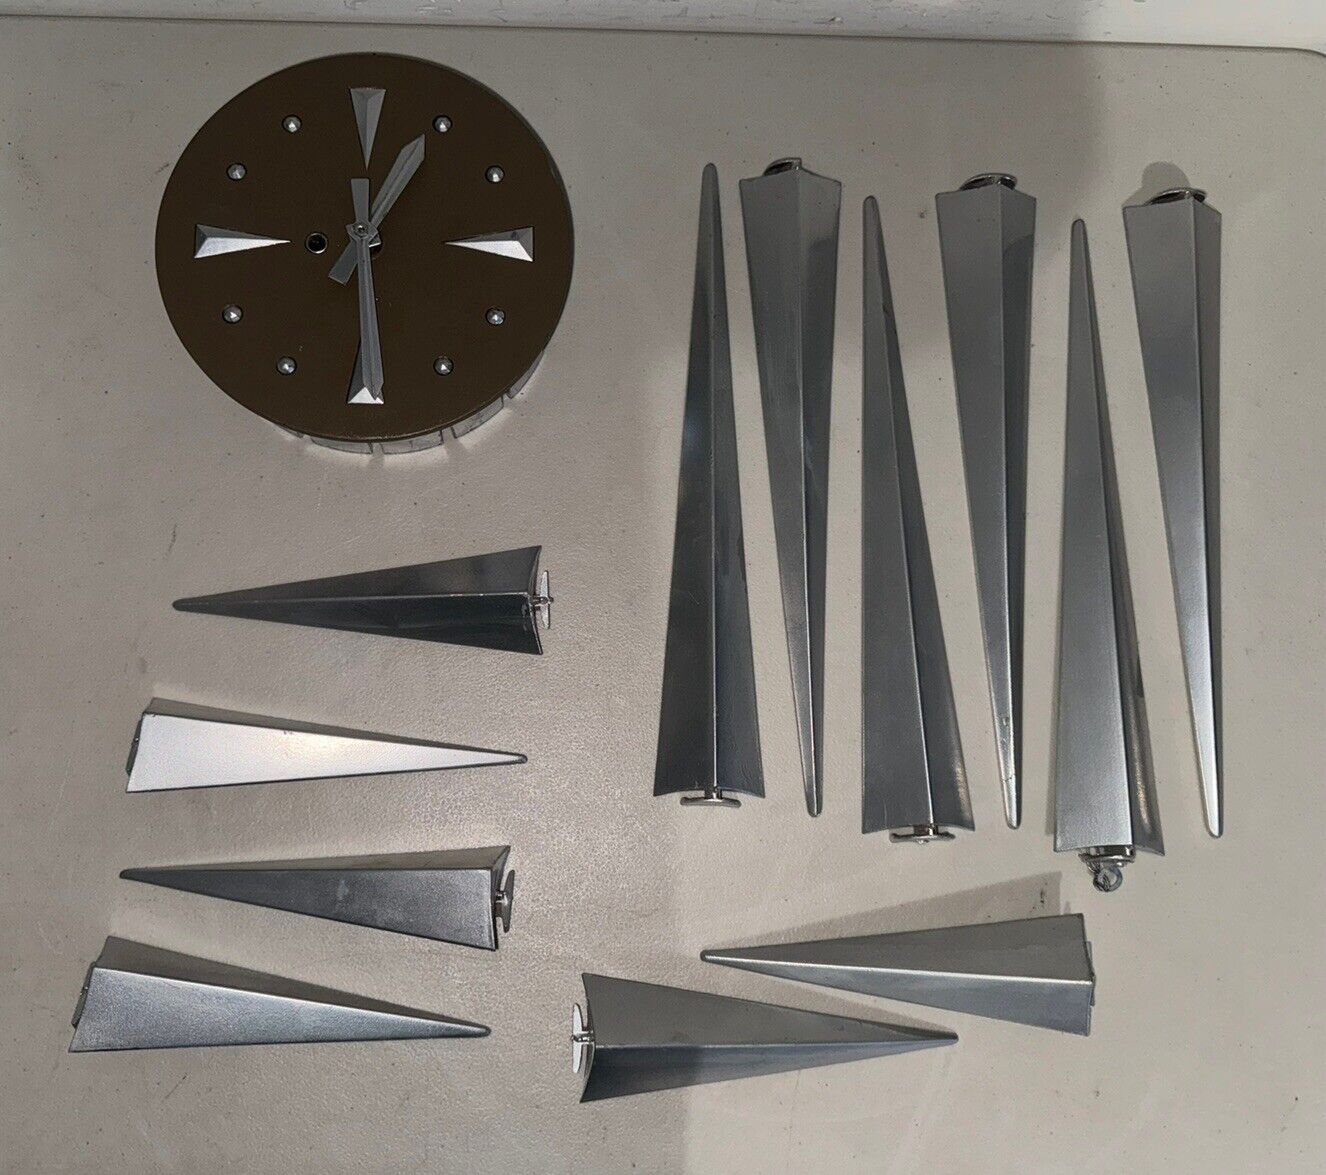 VTG MCM Sunburst Starburst Atomic Era Mechanical Wall Clock Works Welby Style